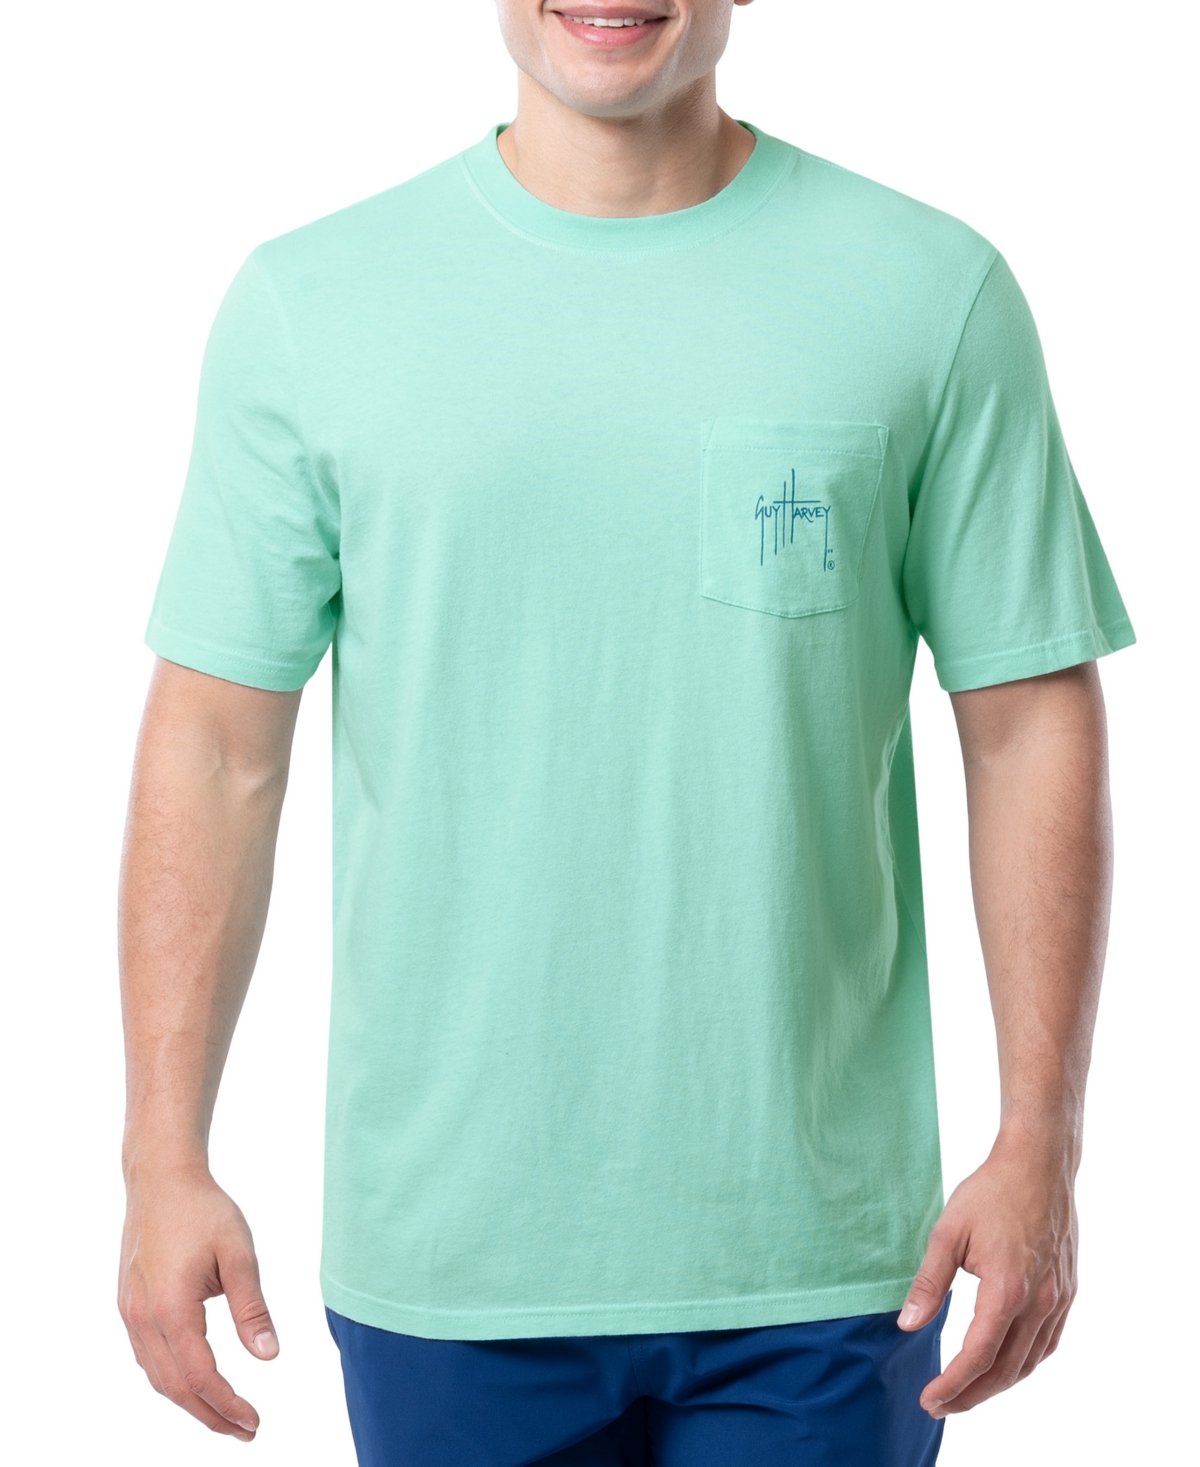 Shop Guy Harvey Men's Call Of The Ocean Logo Graphic Pocket T-shirt In Beach Glass